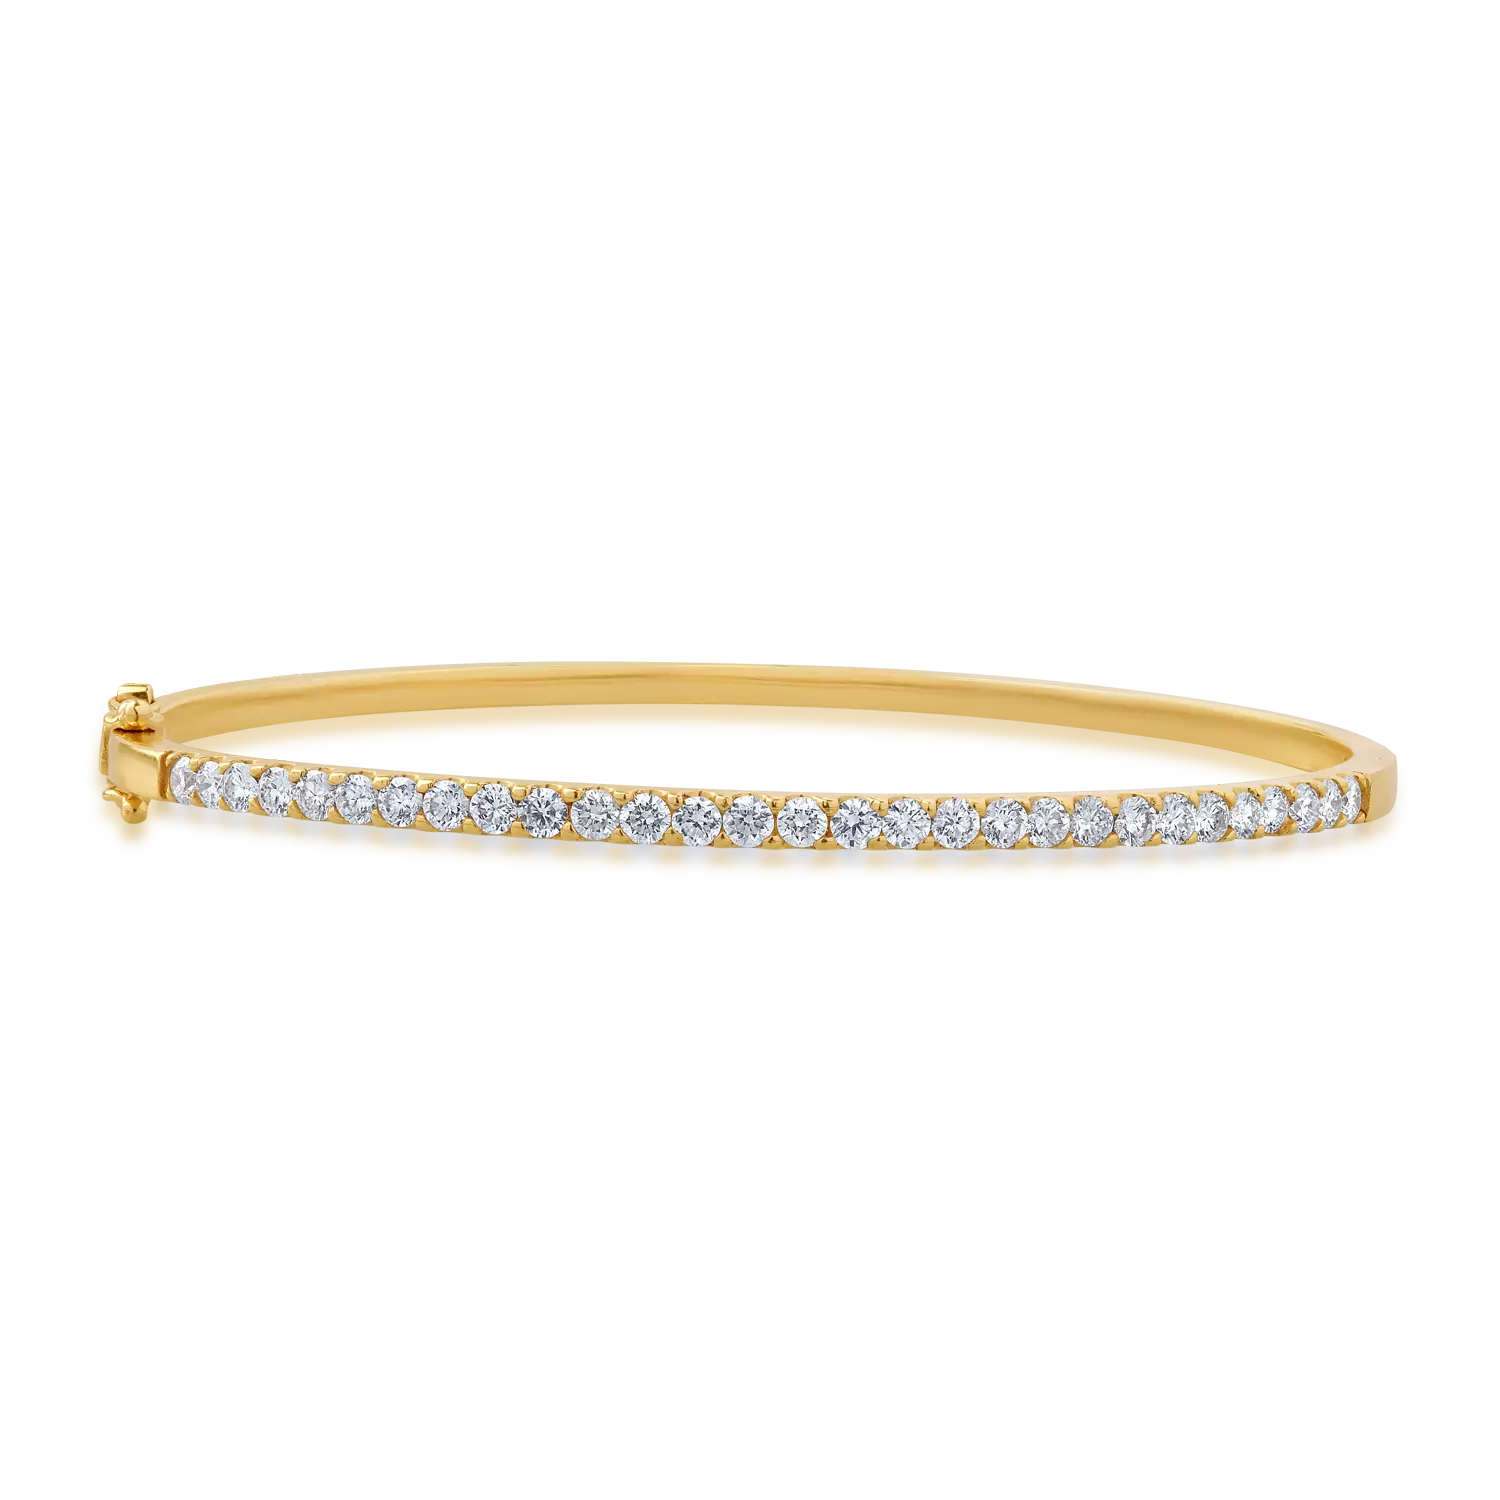 18K yellow gold bracelet with 1.33ct diamonds